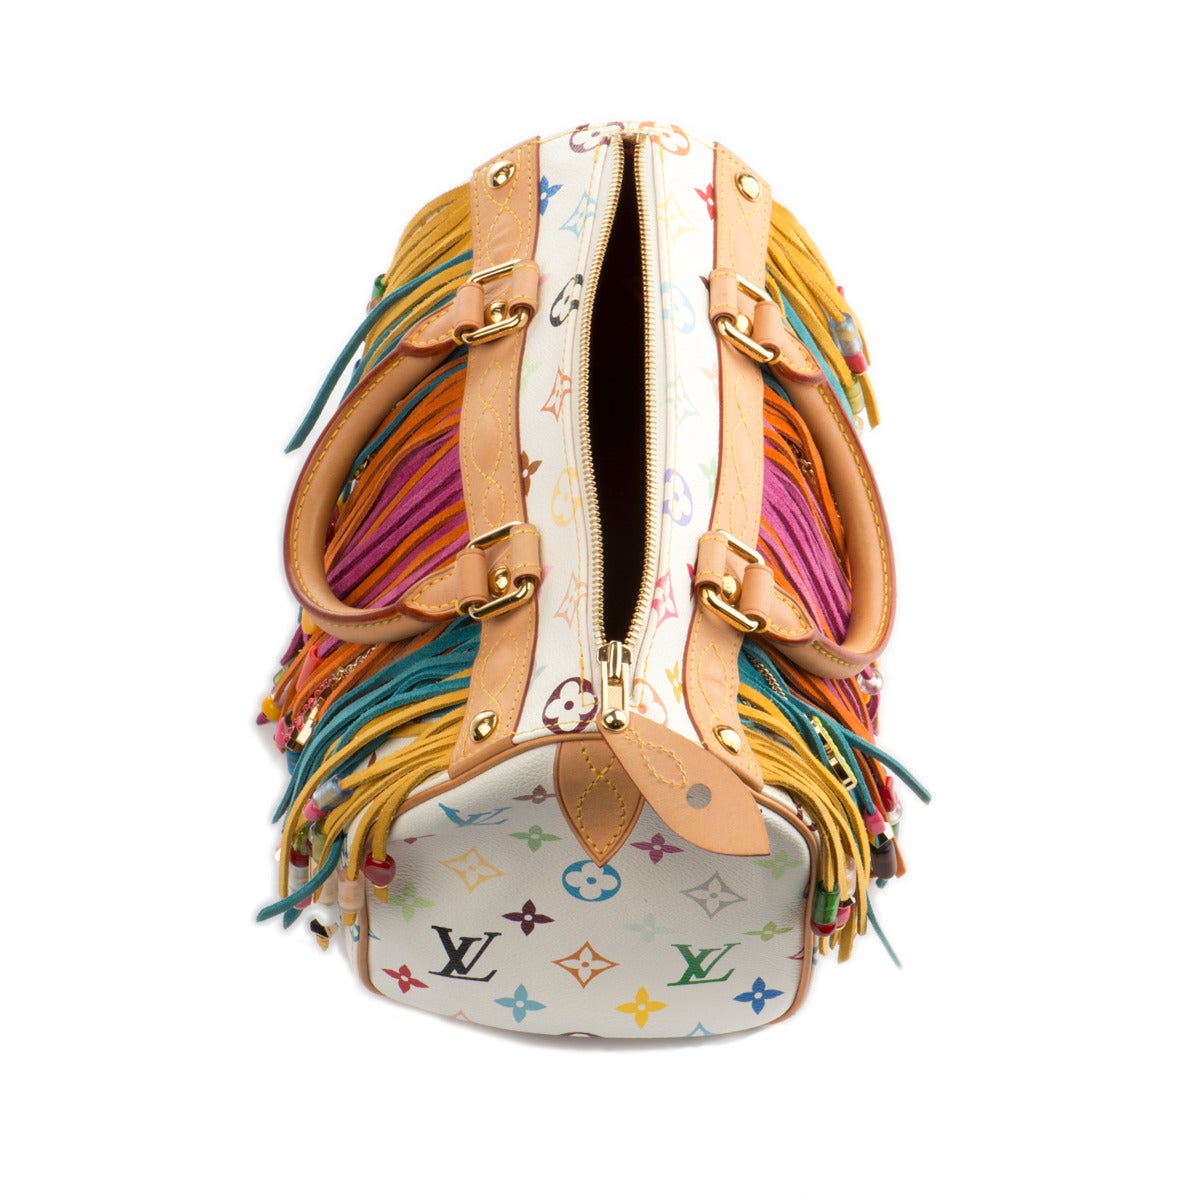 Louis Vuitton Multicolor Fringe Speedy 25 White Bag by Takashi Murakami at 1stdibs